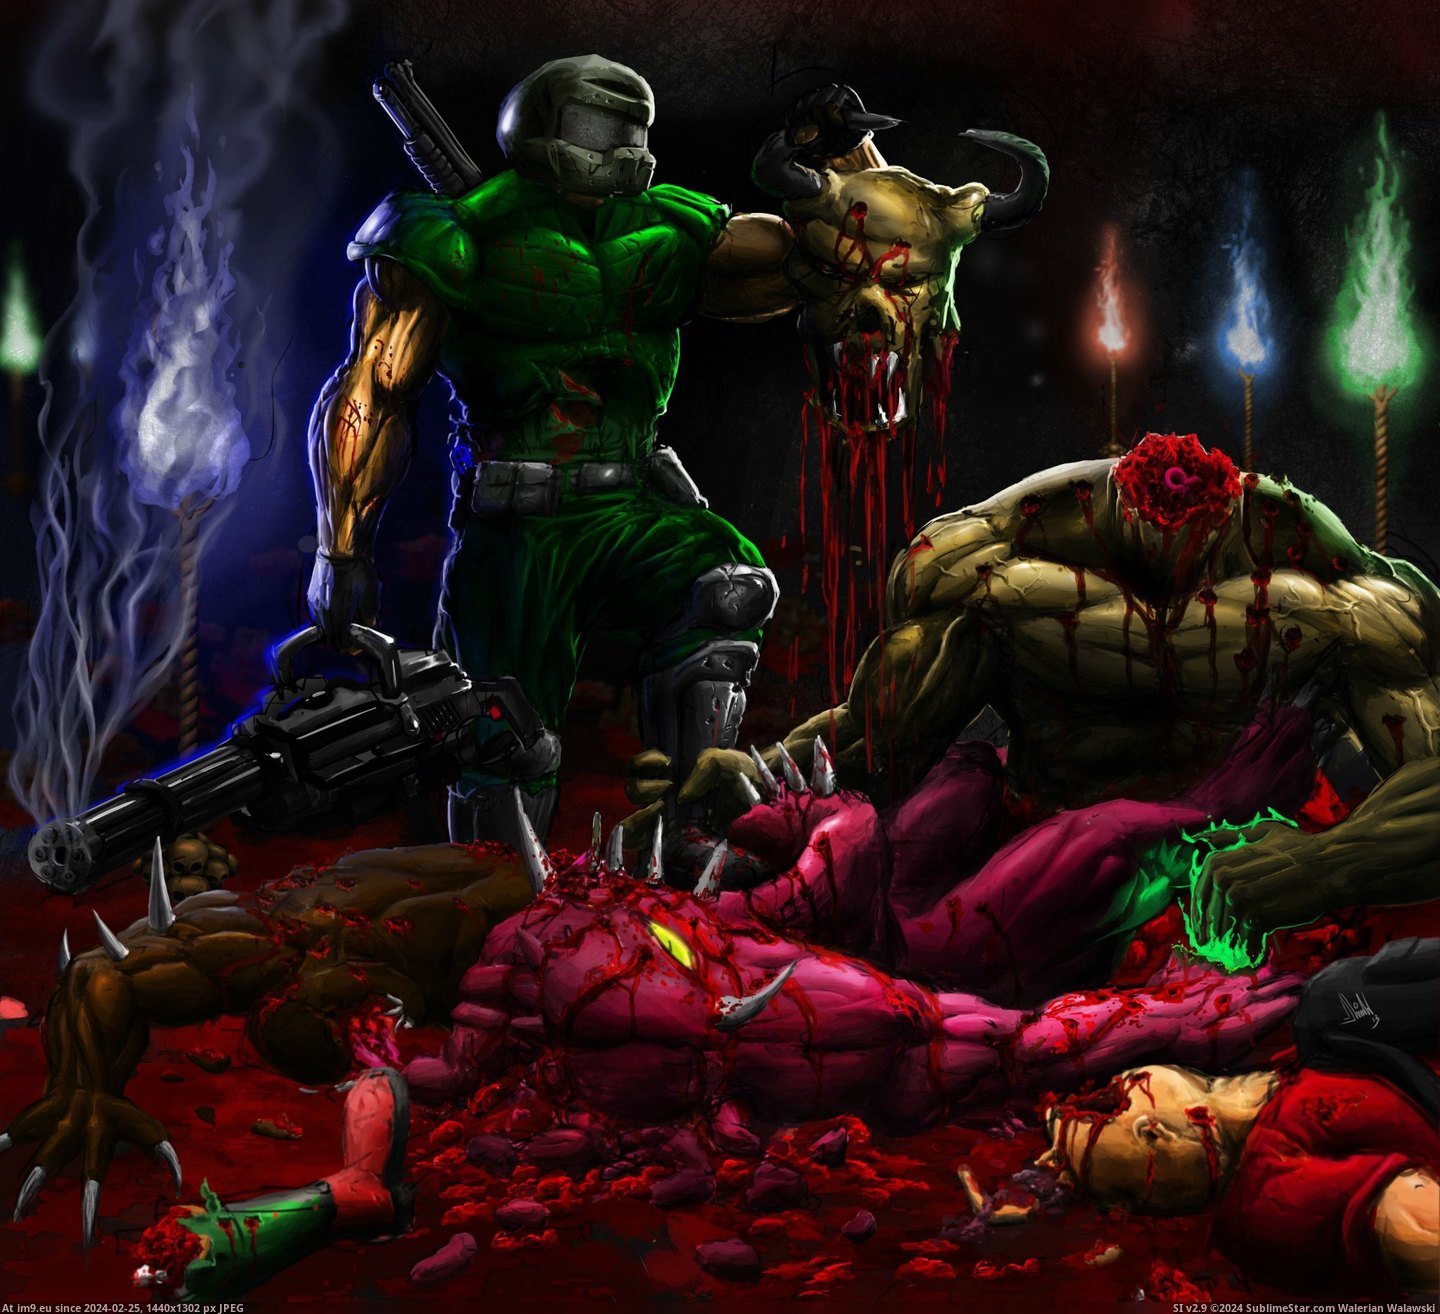 #Gaming #Wallpaper #Delightful #Brutal #Doom [Gaming] Delightful Brutal DOOM wallpaper Pic. (Bild von album My r/GAMING favs))